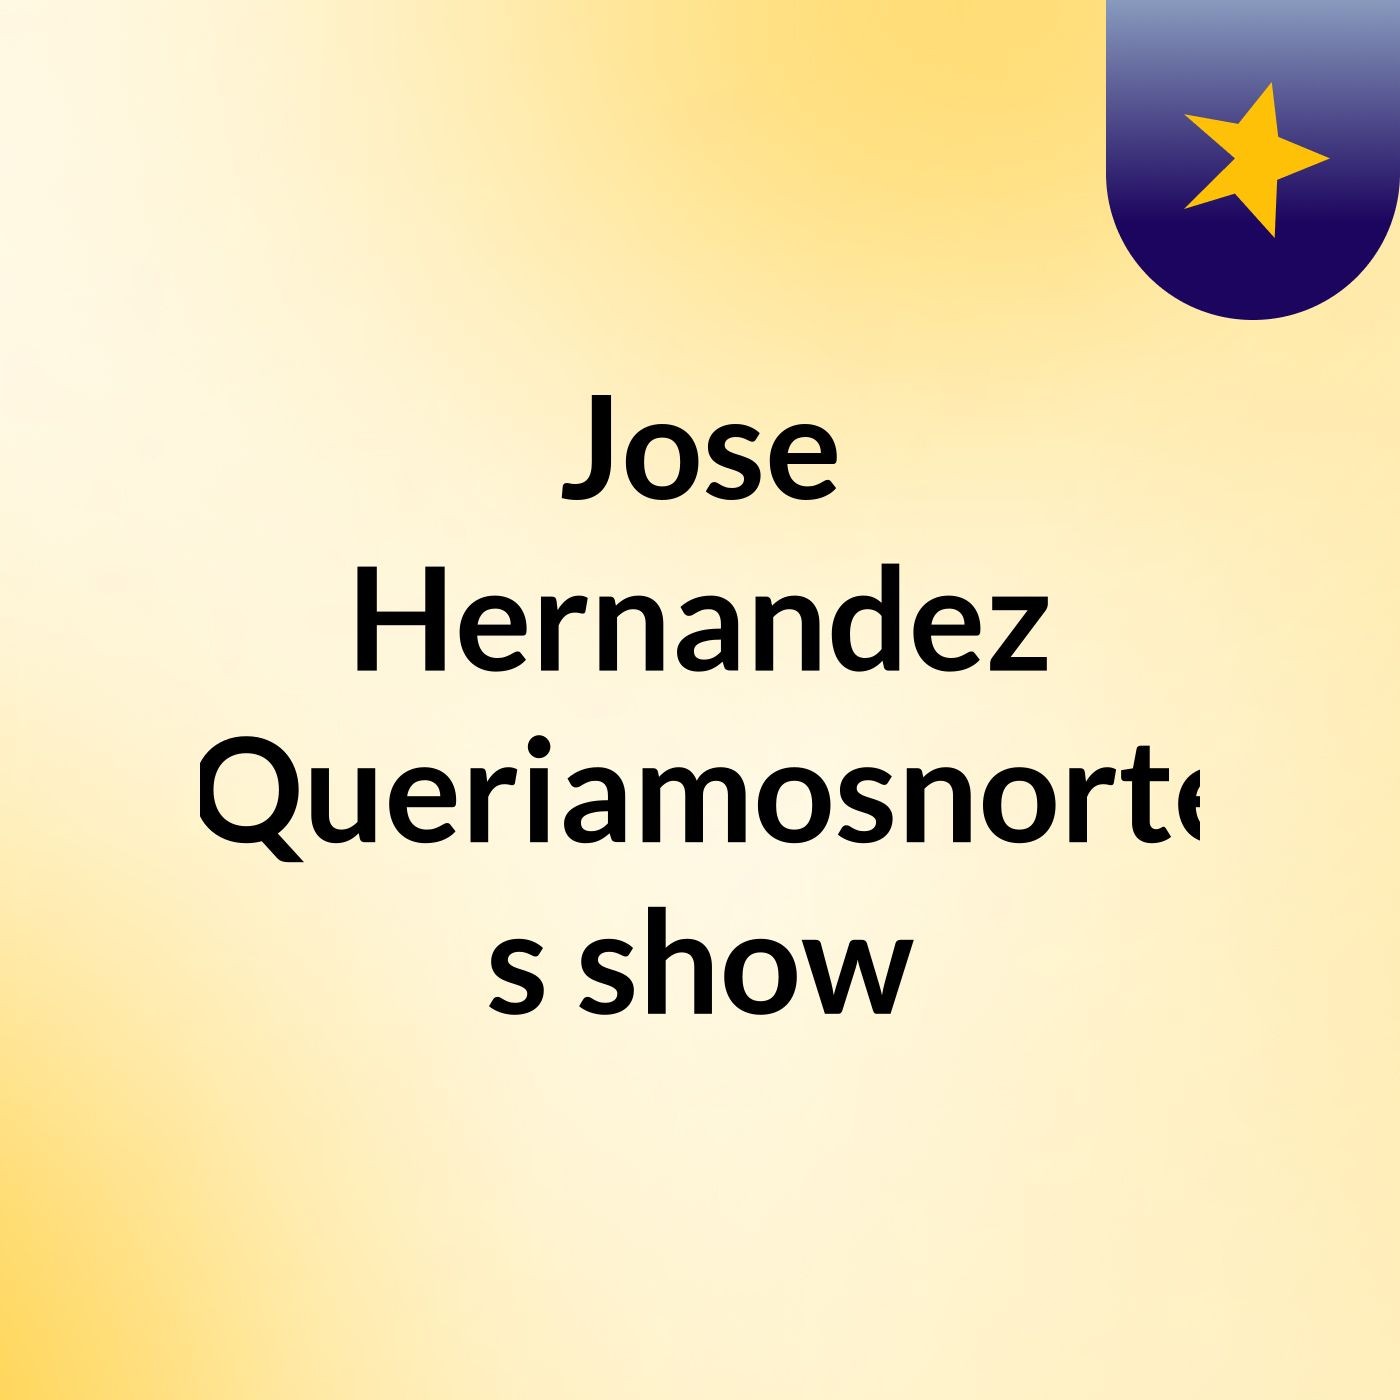 Jose Hernandez (Queriamosnorte's show